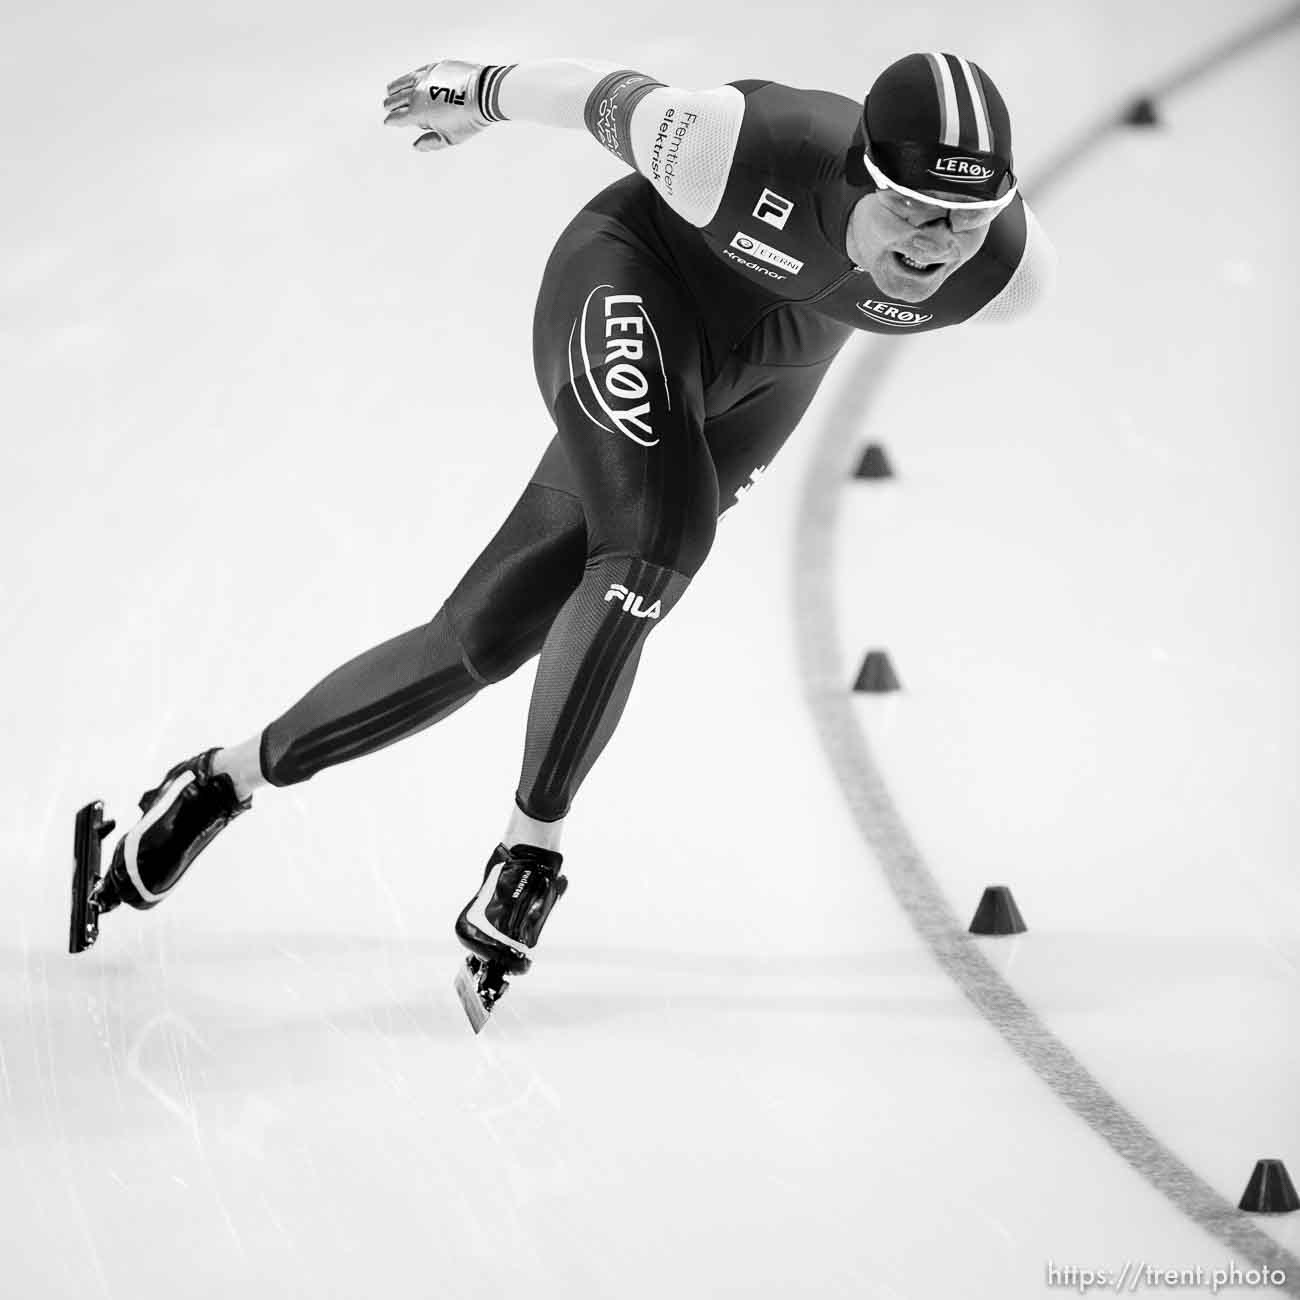 ISU World Single Distances Speed Skating Championships Trent.Photo